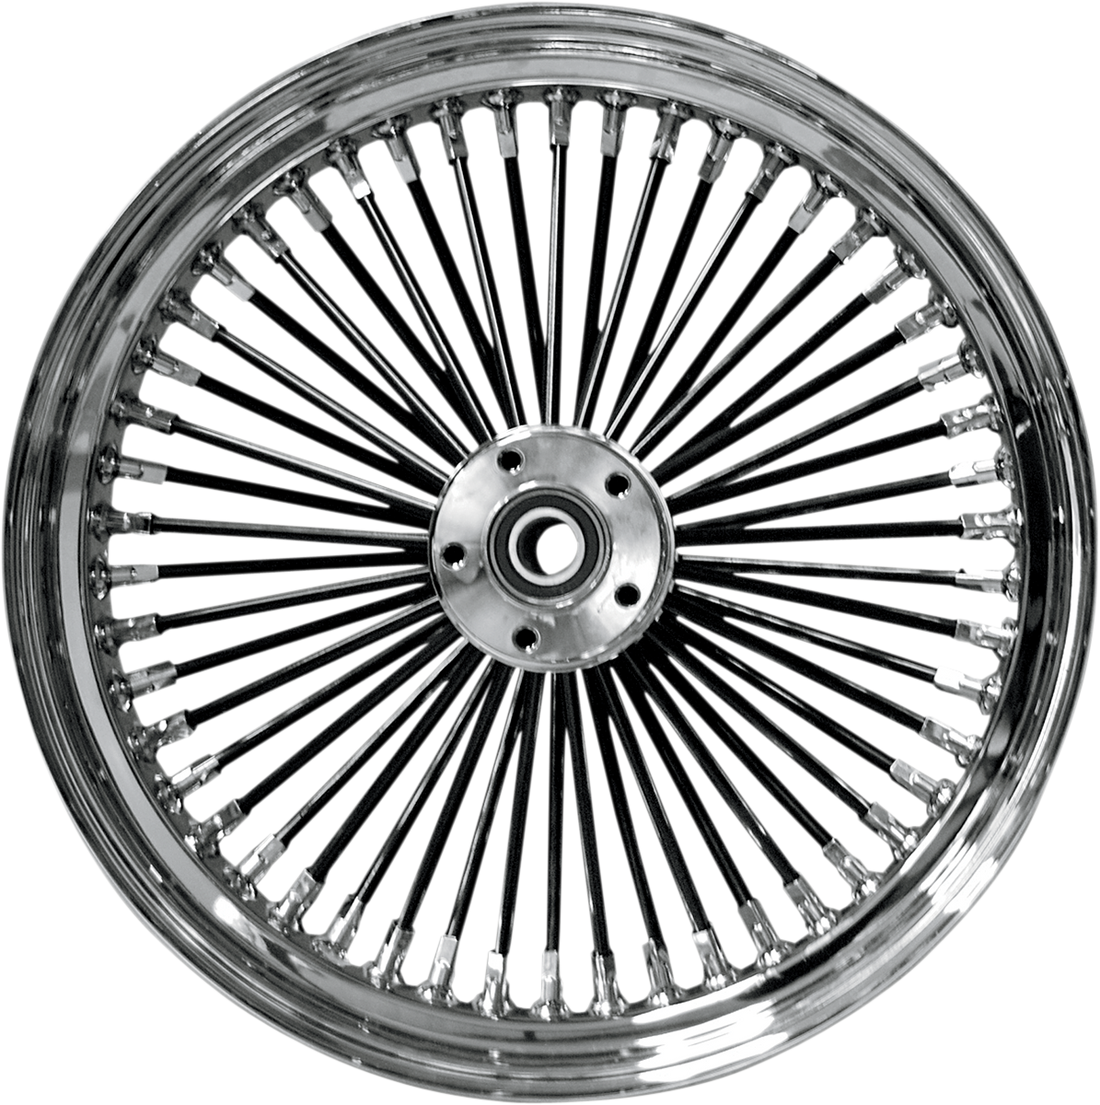 DRAG SPECIALTIES Front Wheel - Dual Disc/ABS - Black Chrome - 21"x3.50" - '08-'19 04235202408BSAB